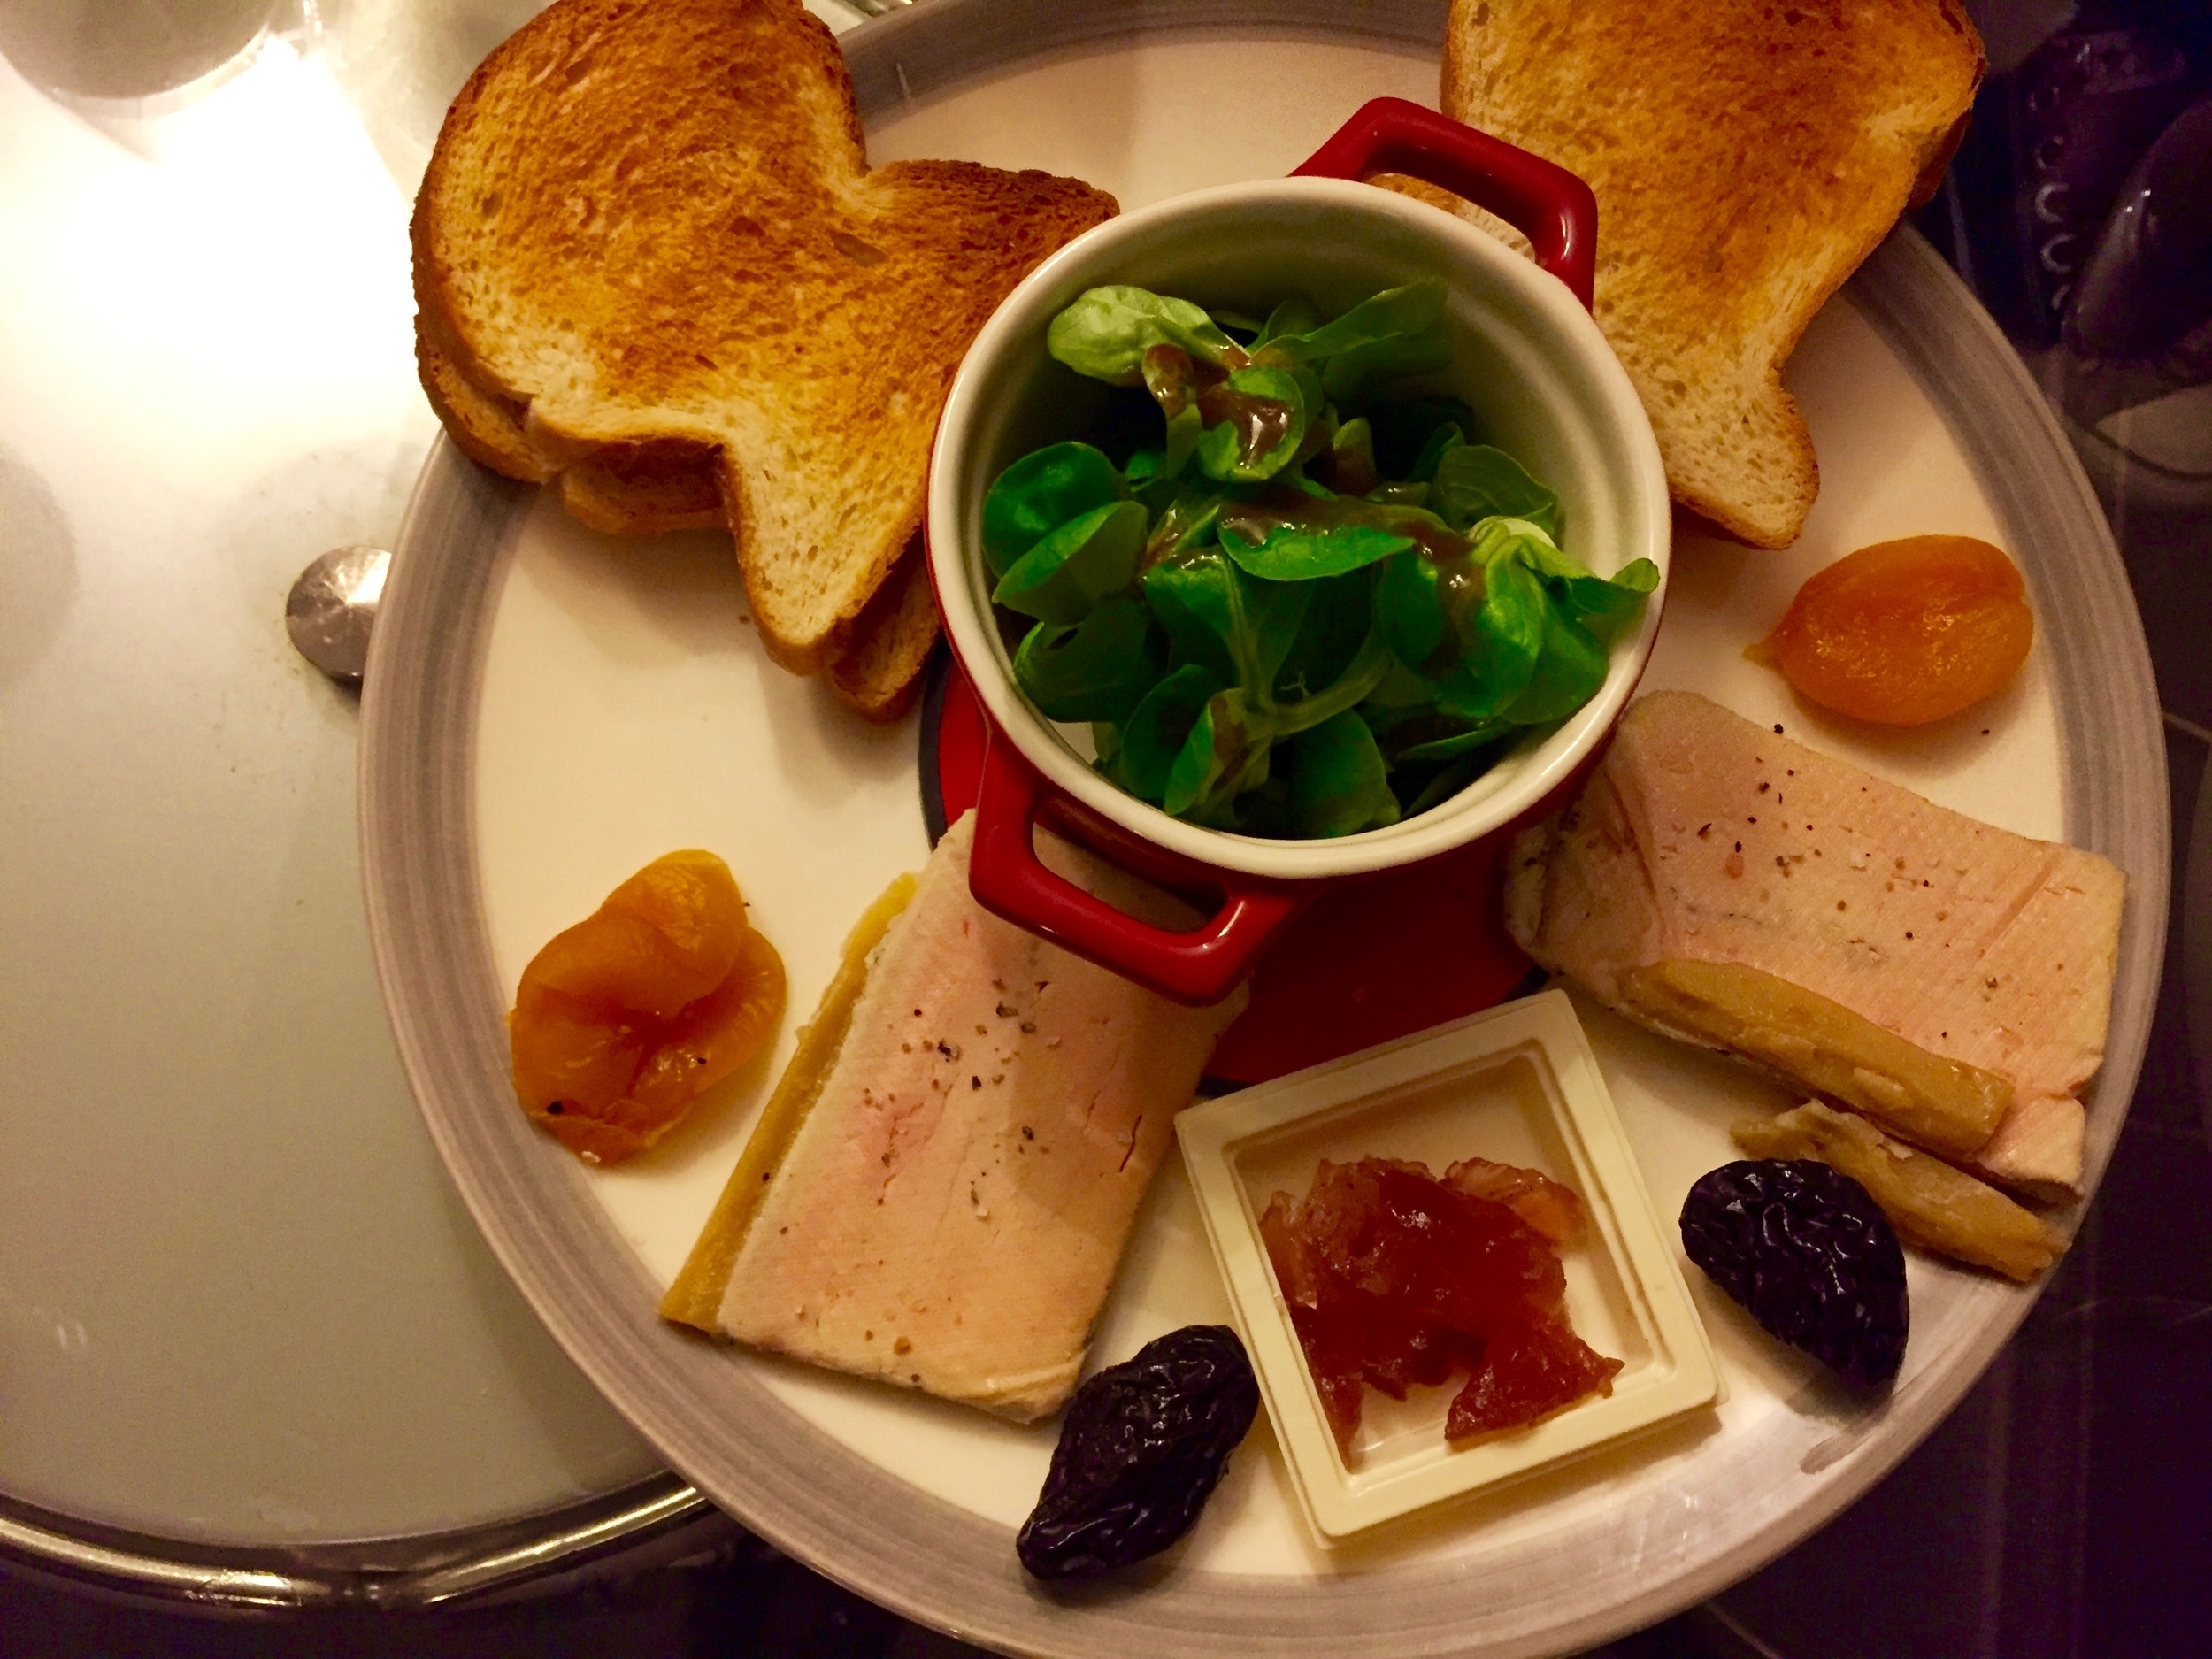 Feasting Pretty: Never enough foie gras